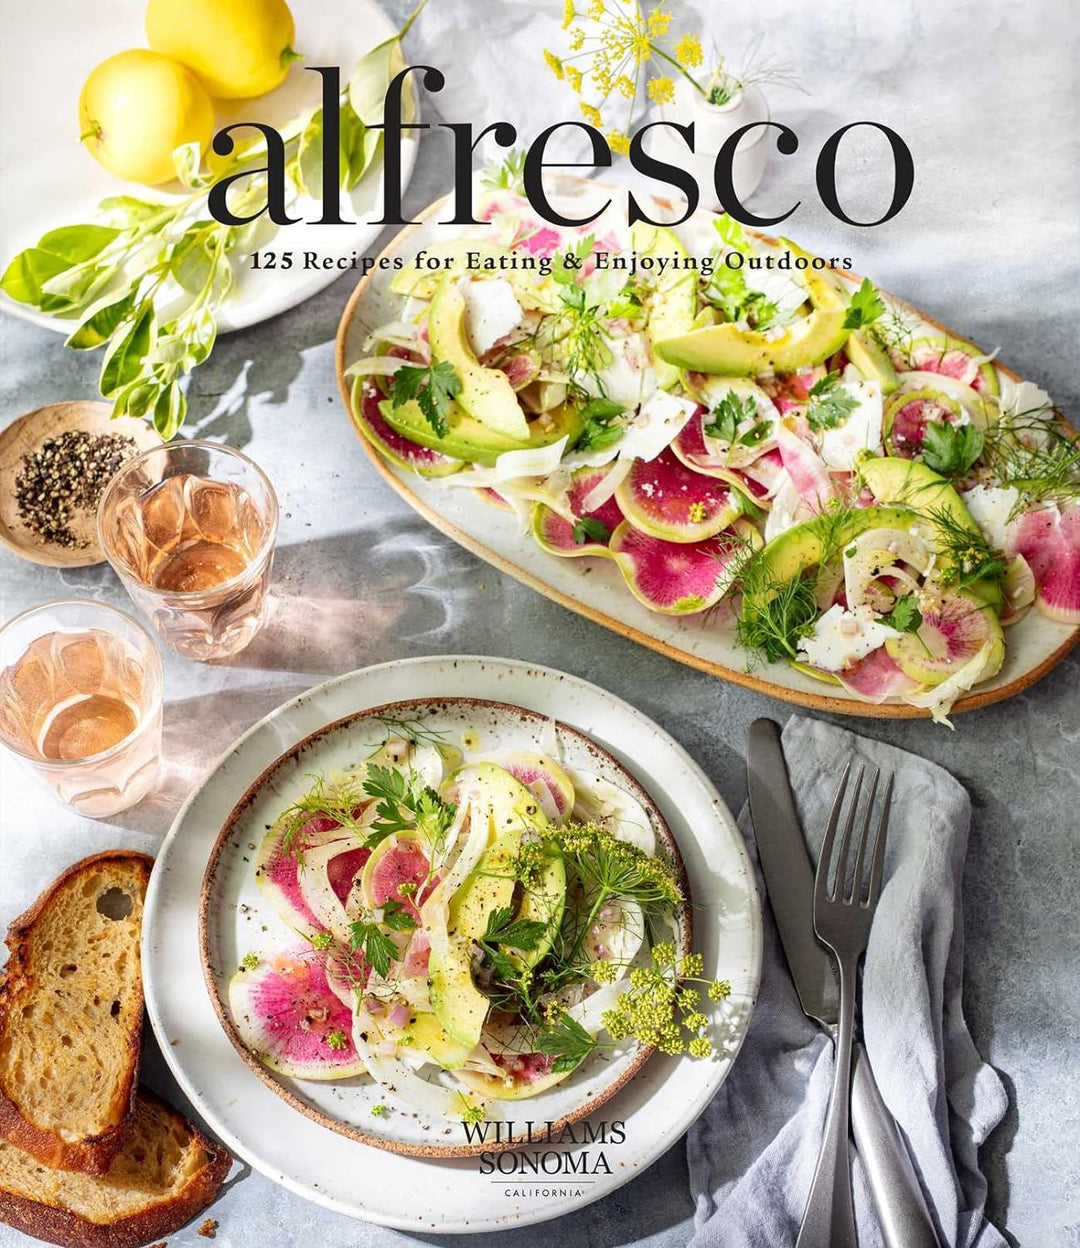 Hank & Sylvie's - Alfresco: 125 Recipes for Eating & Enjoying Outdoors